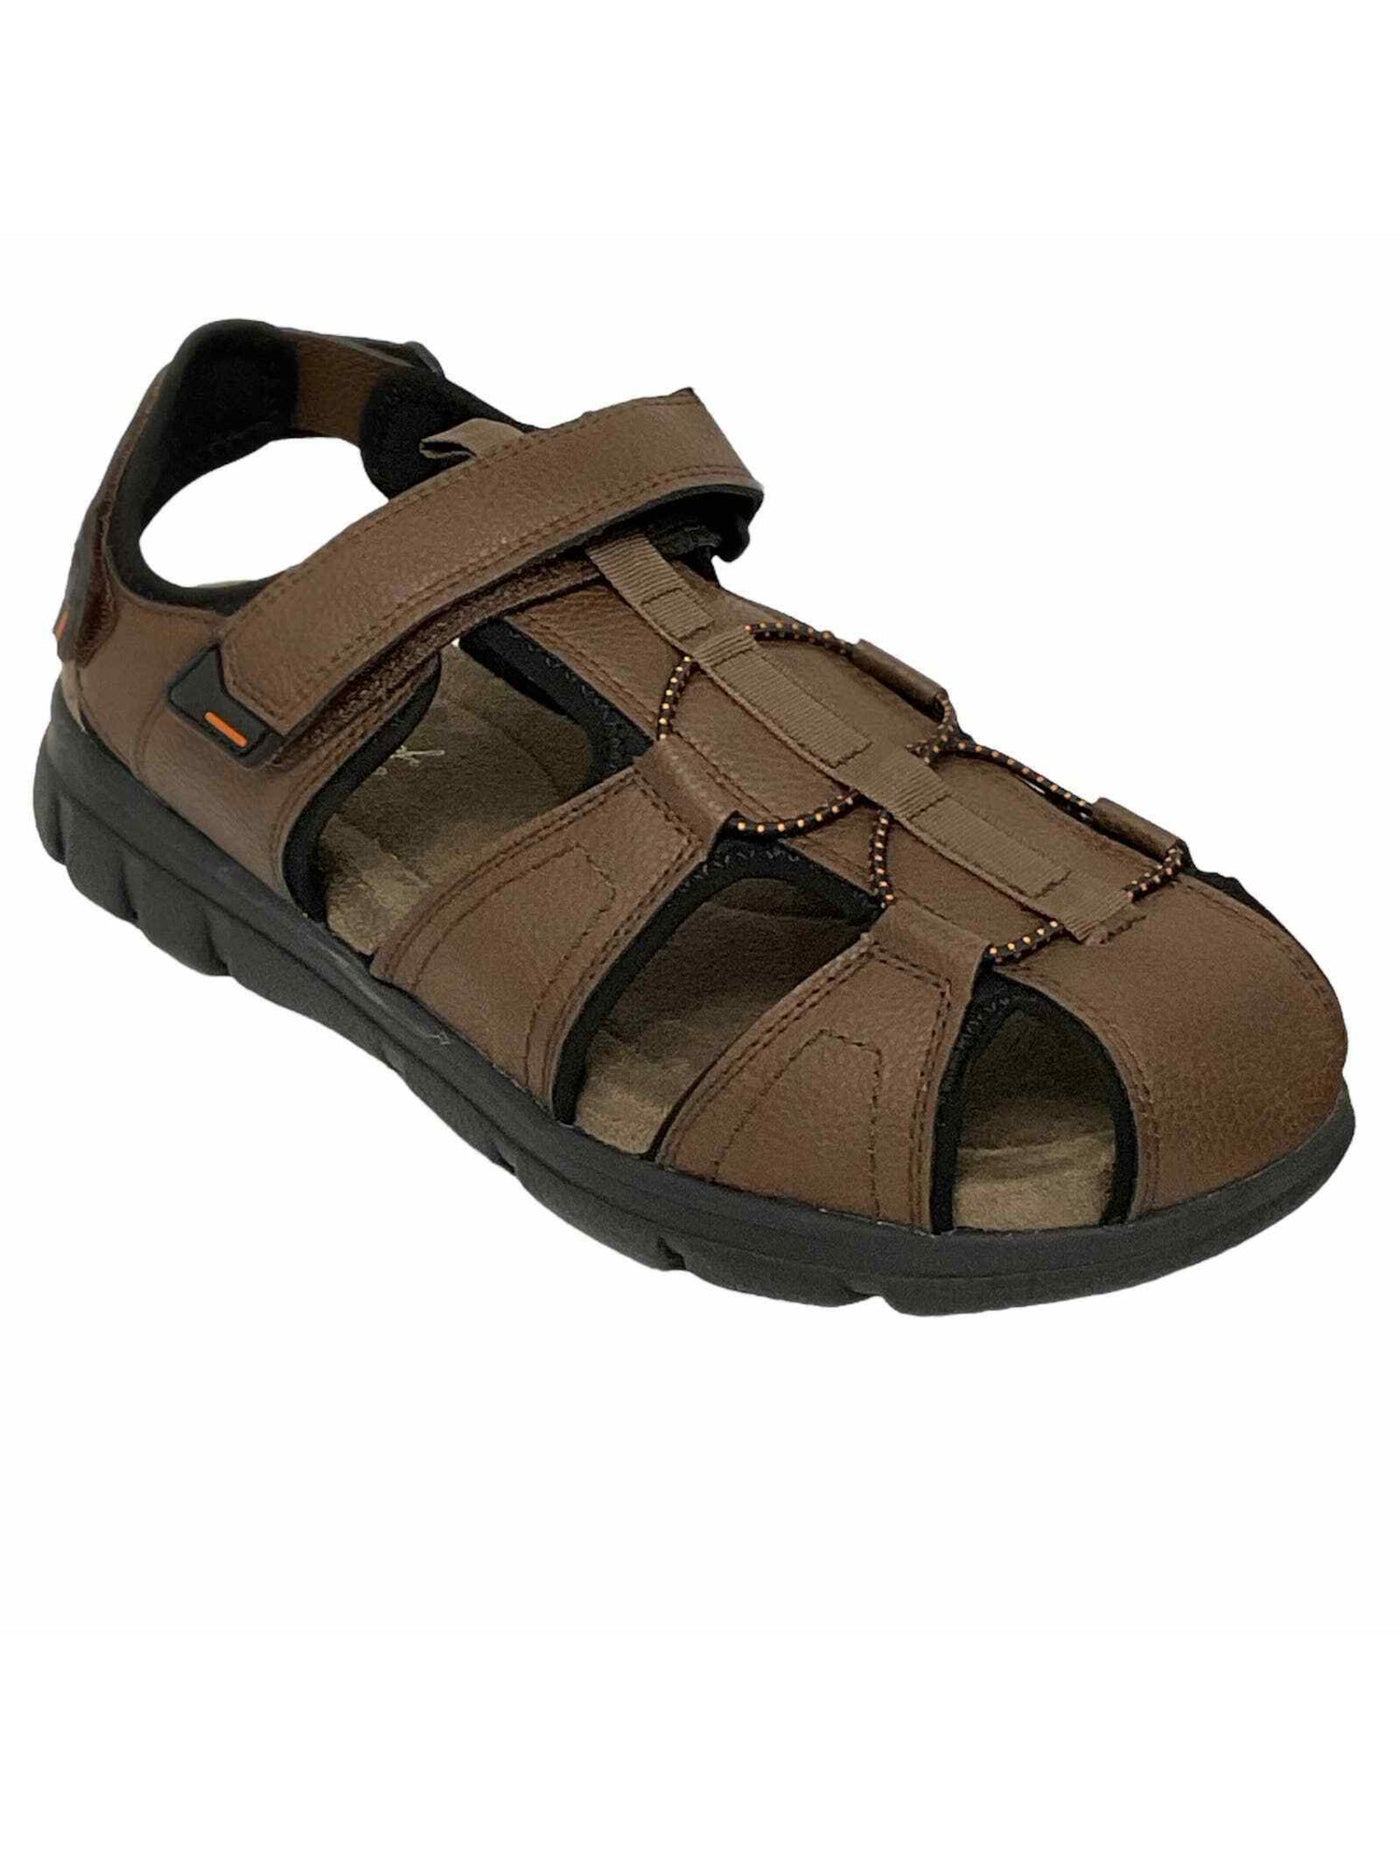 WEATHERPROOF VINTAGE Mens Brown Caged Cushioned Adjustable Cory Round Toe Platform Sandals Shoes 9 M